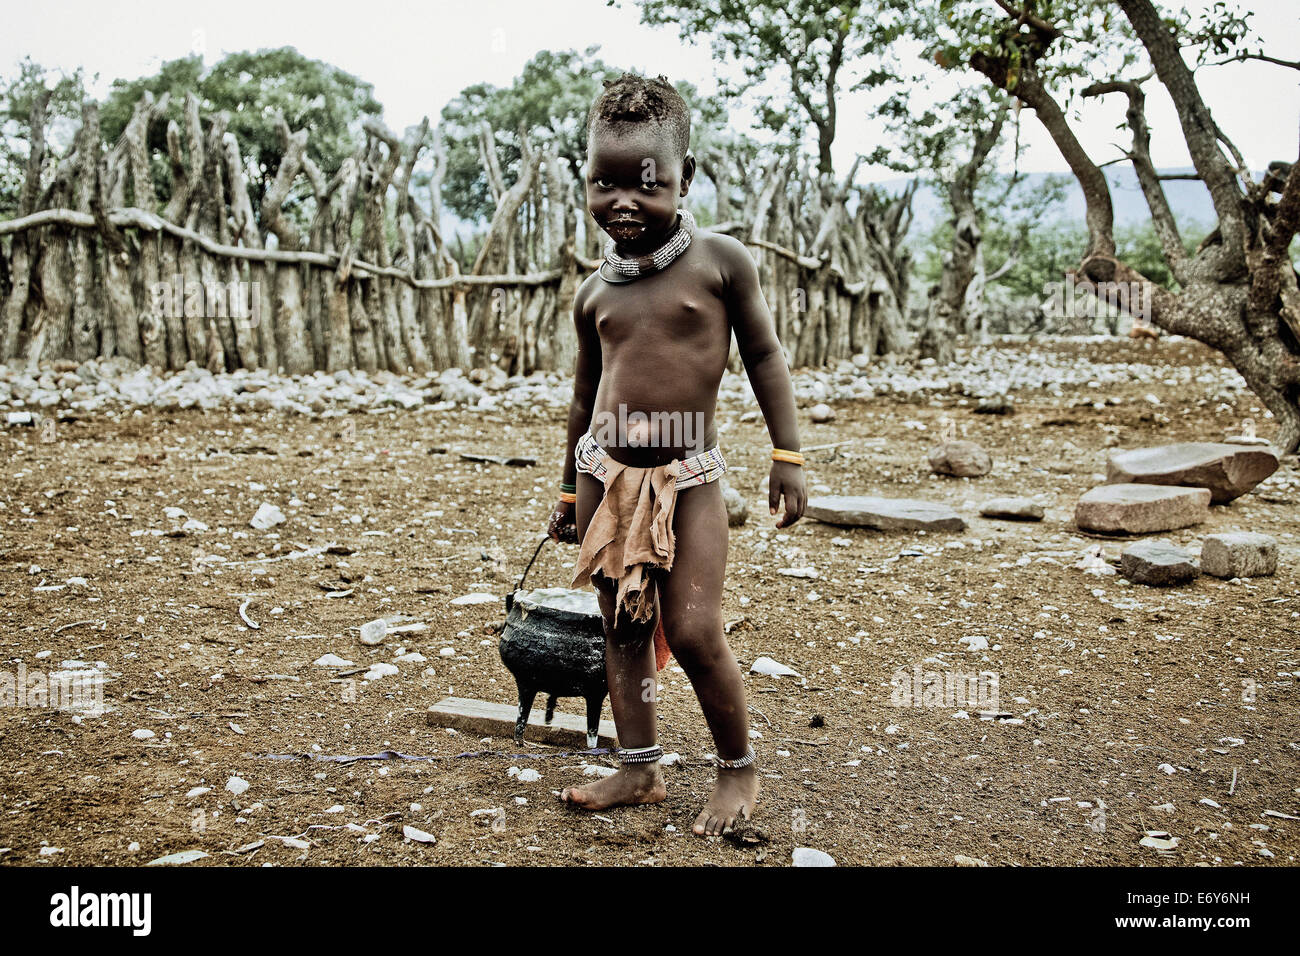 Child of the Himba tribe carrying a pot, Kaokoland, Namibia, Africa Stock Photo